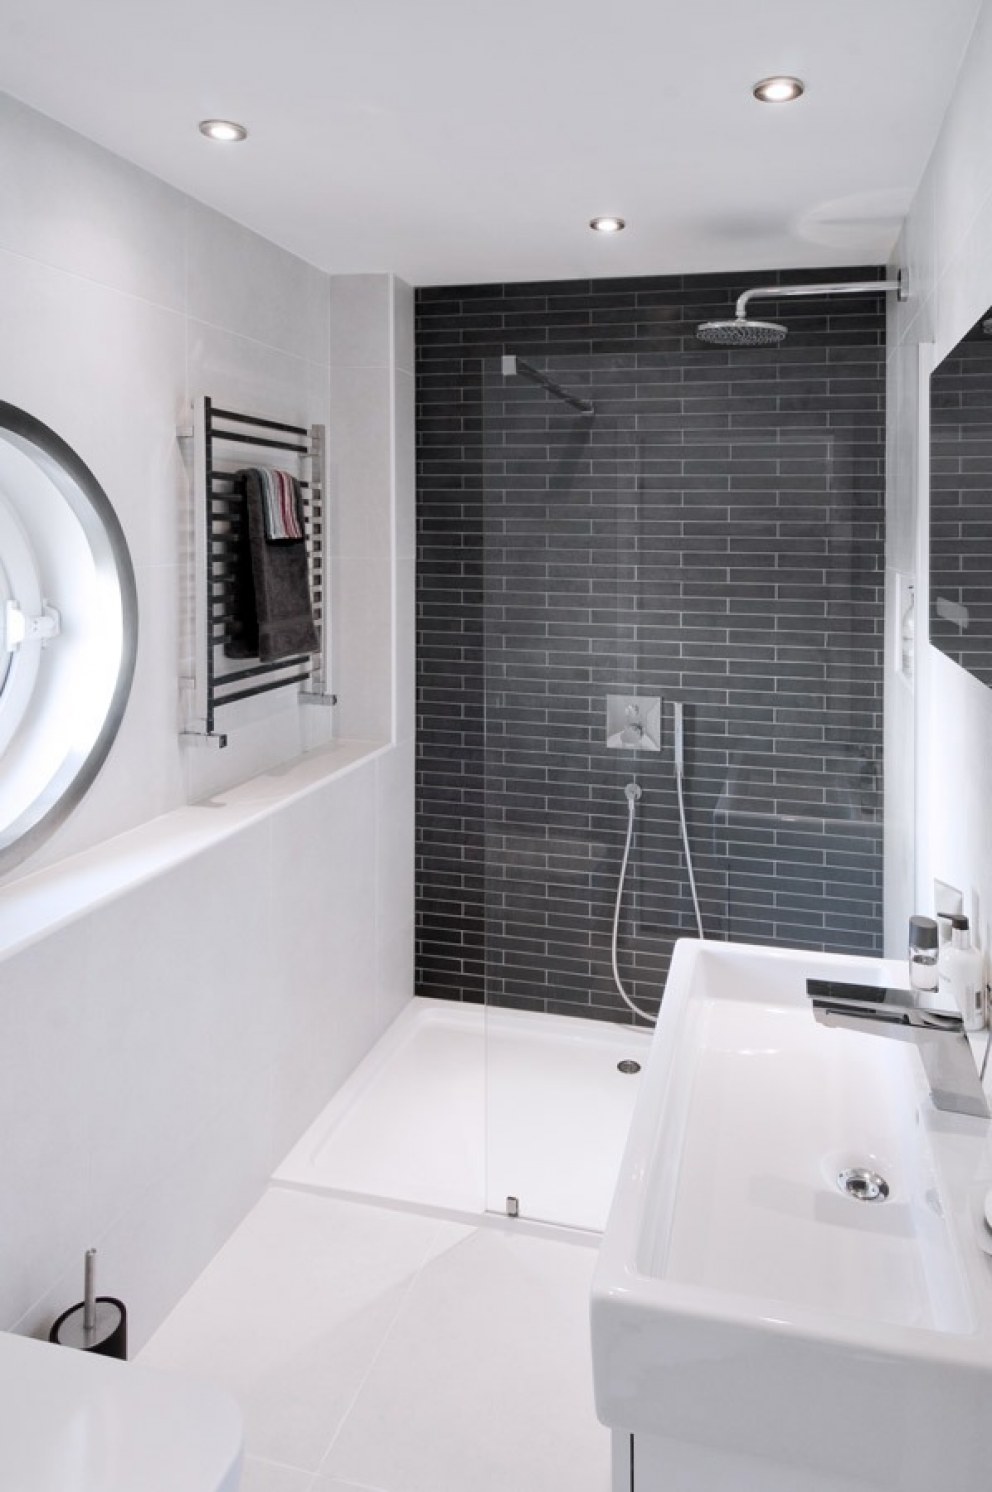 Contemporary master and en suite bathrooms for East London residence | En suite bathroom | Interior Designers